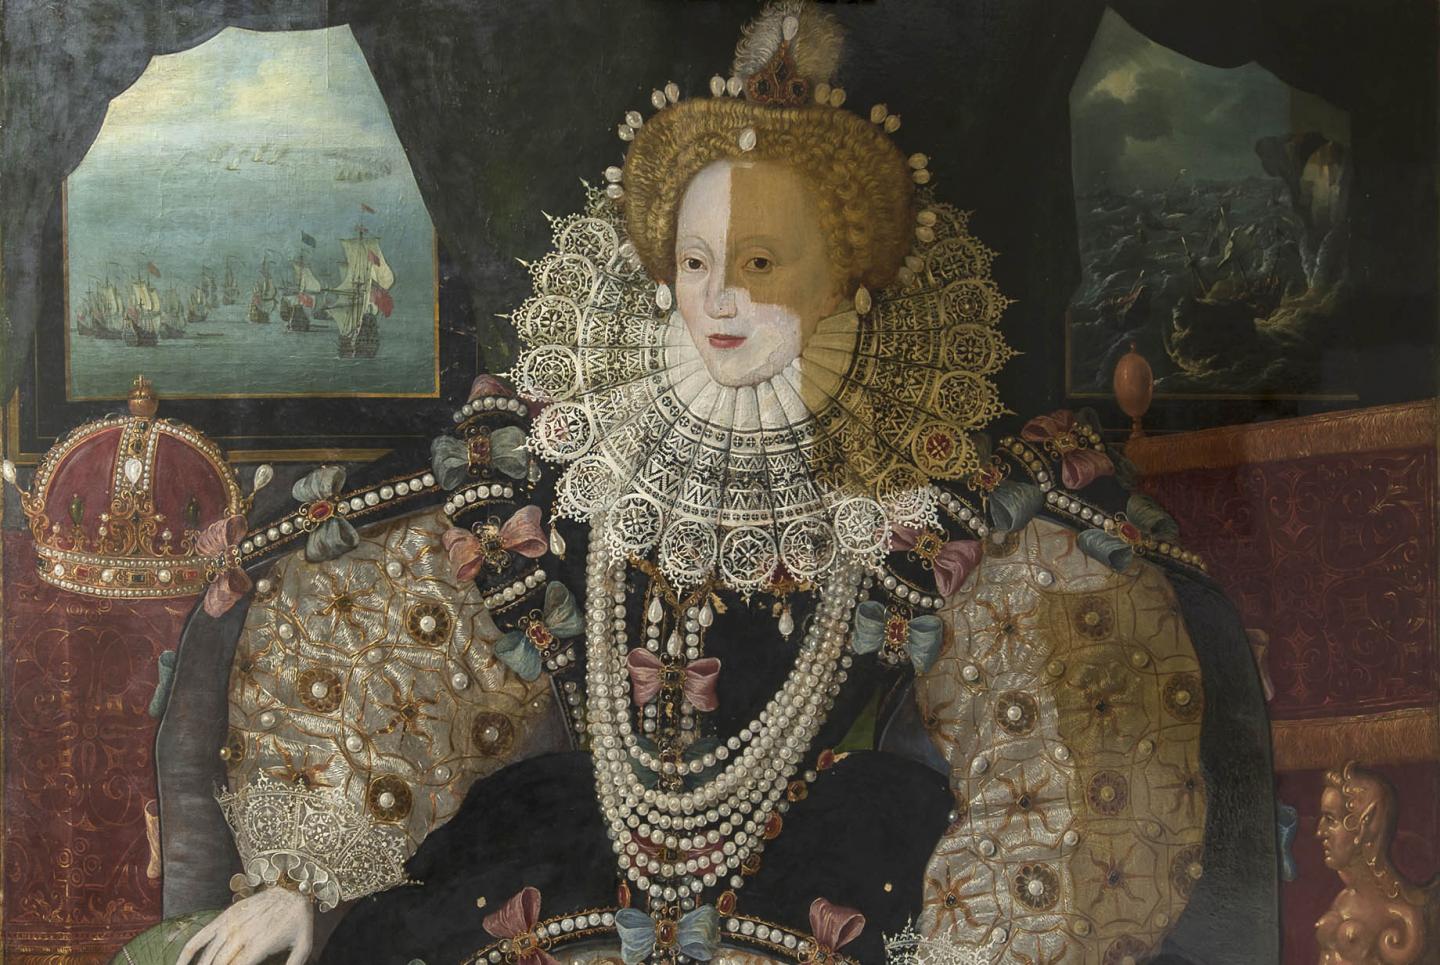 The Armada Portrait of Queen Elizabeth I: removing the varnish